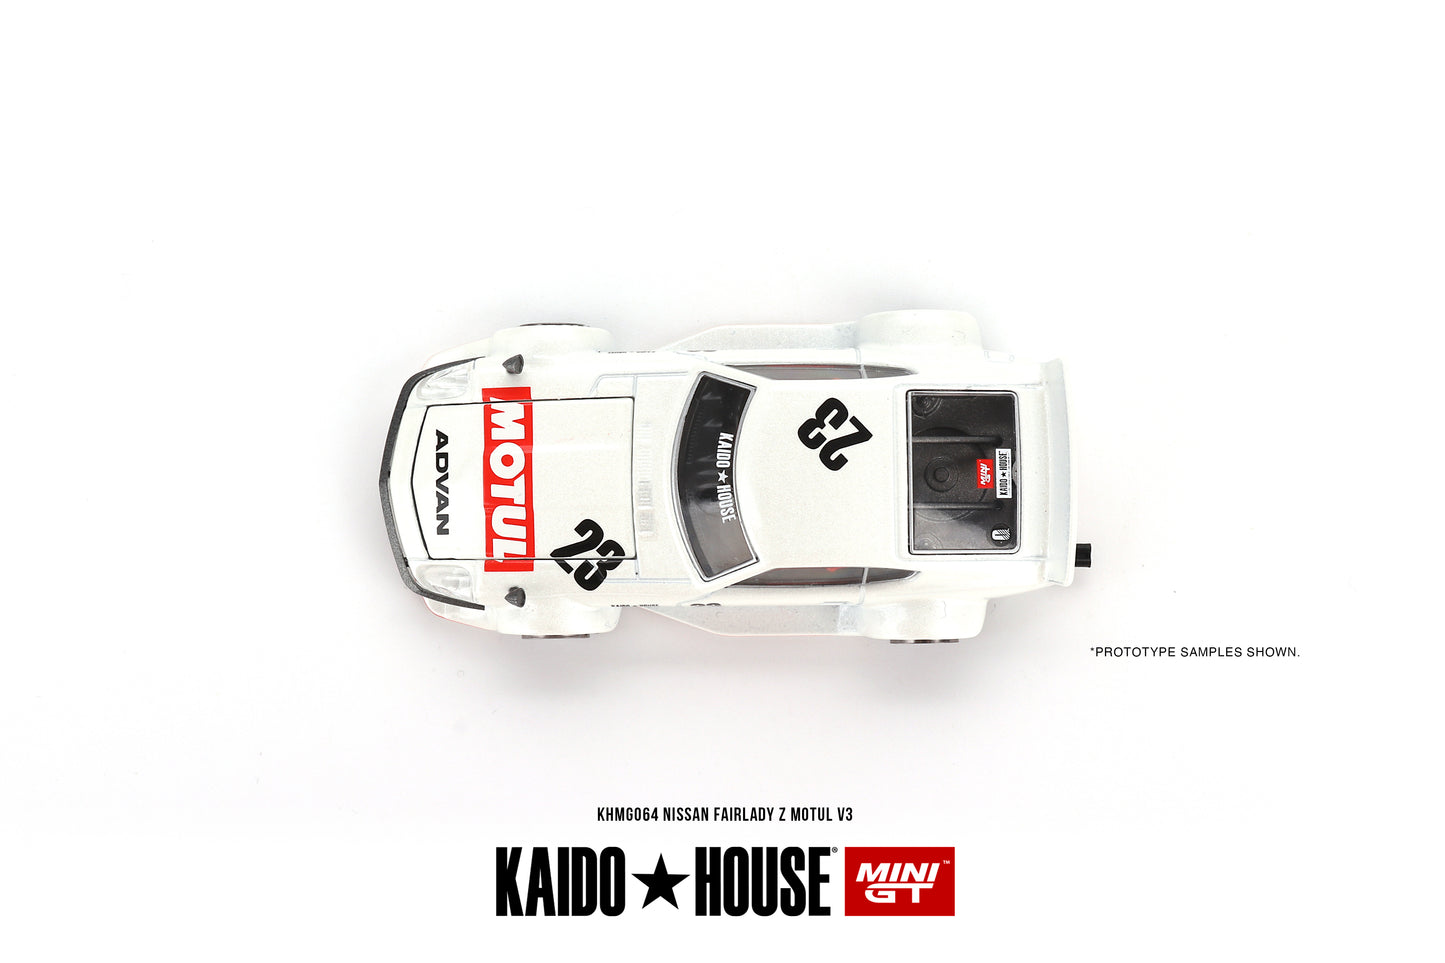 MiniGT - KAIDO House Datsun Fairlady Z Motul V3